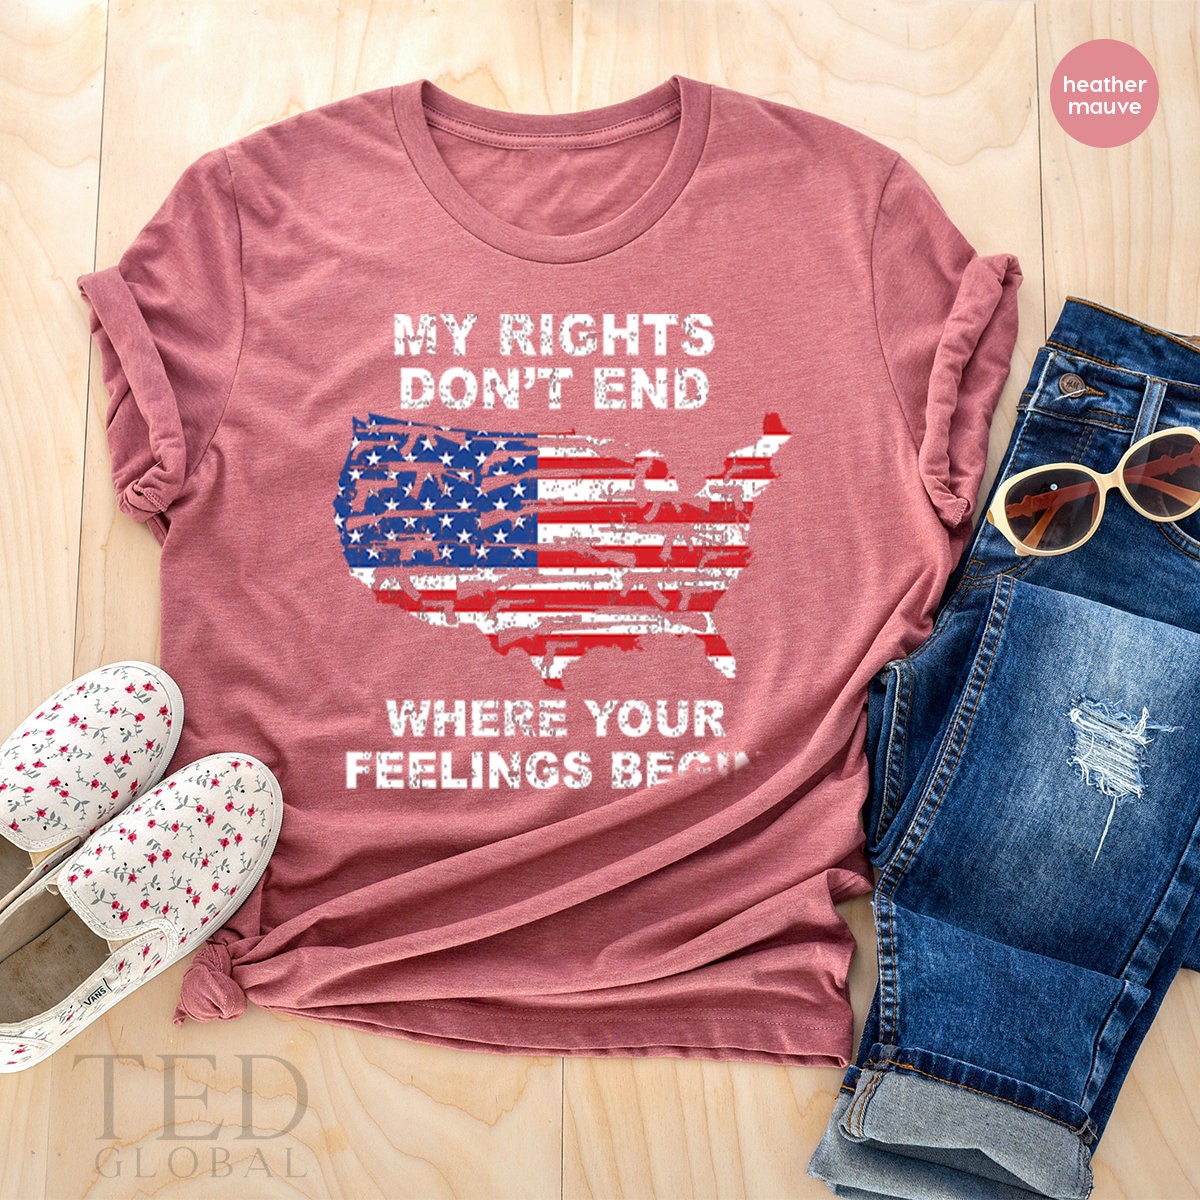 Gun T Shirt,Gun Lover Shirt,Gun Rights Shirt,Gun Owner T Shirt,My Rights Don't End Where Your Feelings Begin Shirt,Dad Shirt,Patriotic Shirt - Fastdeliverytees.com